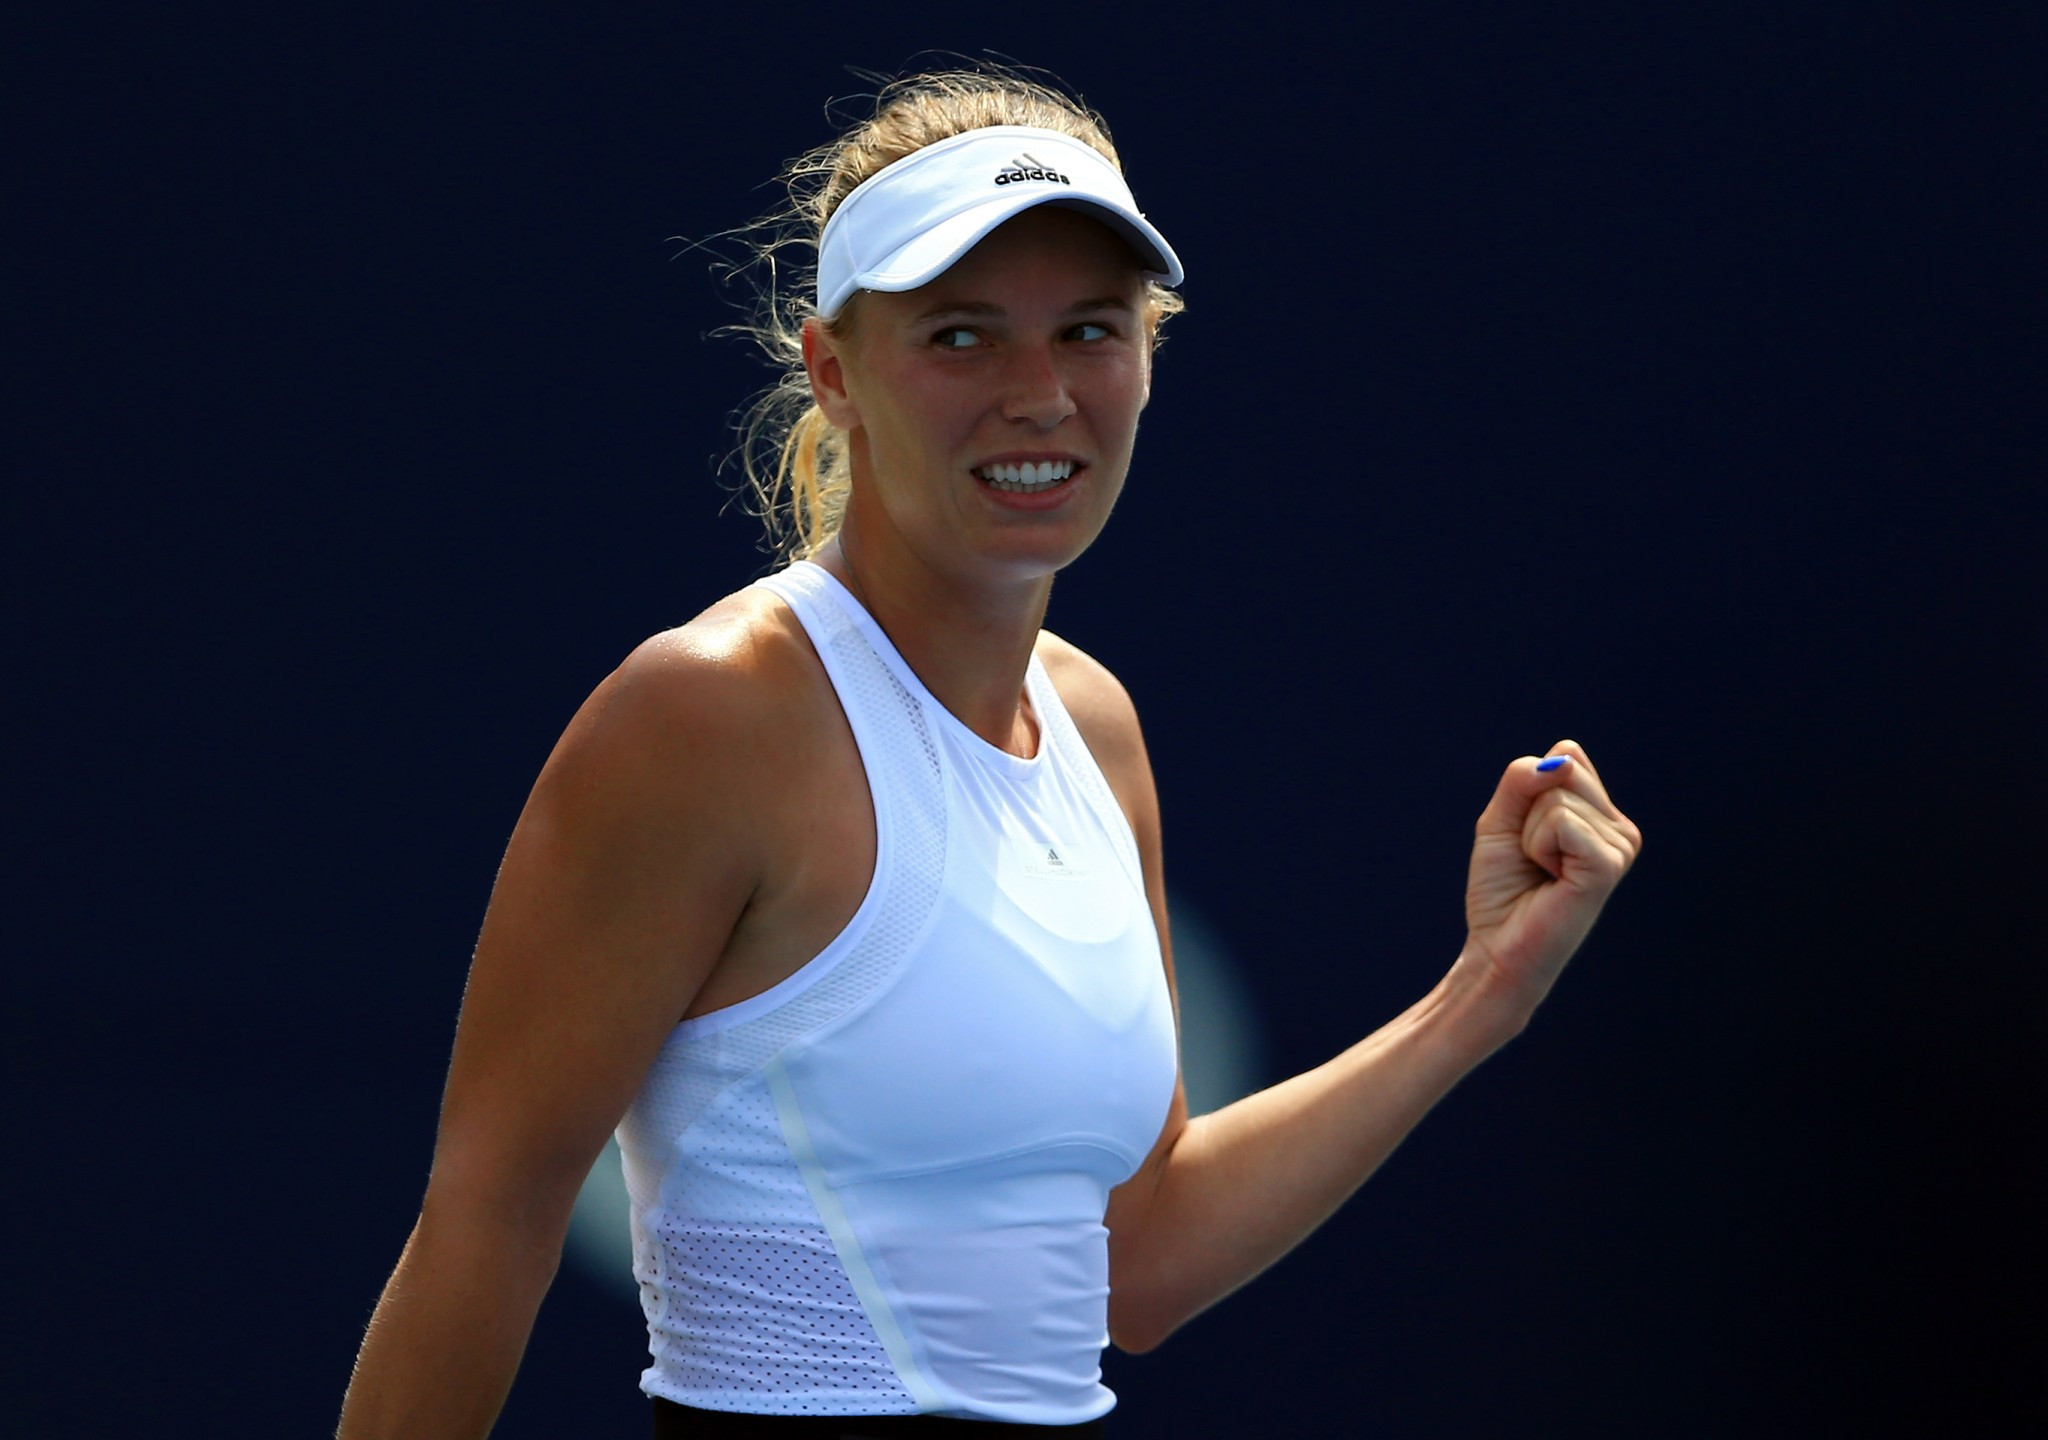 Wozniacki upsets world number one Pliskova in Rogers Cup